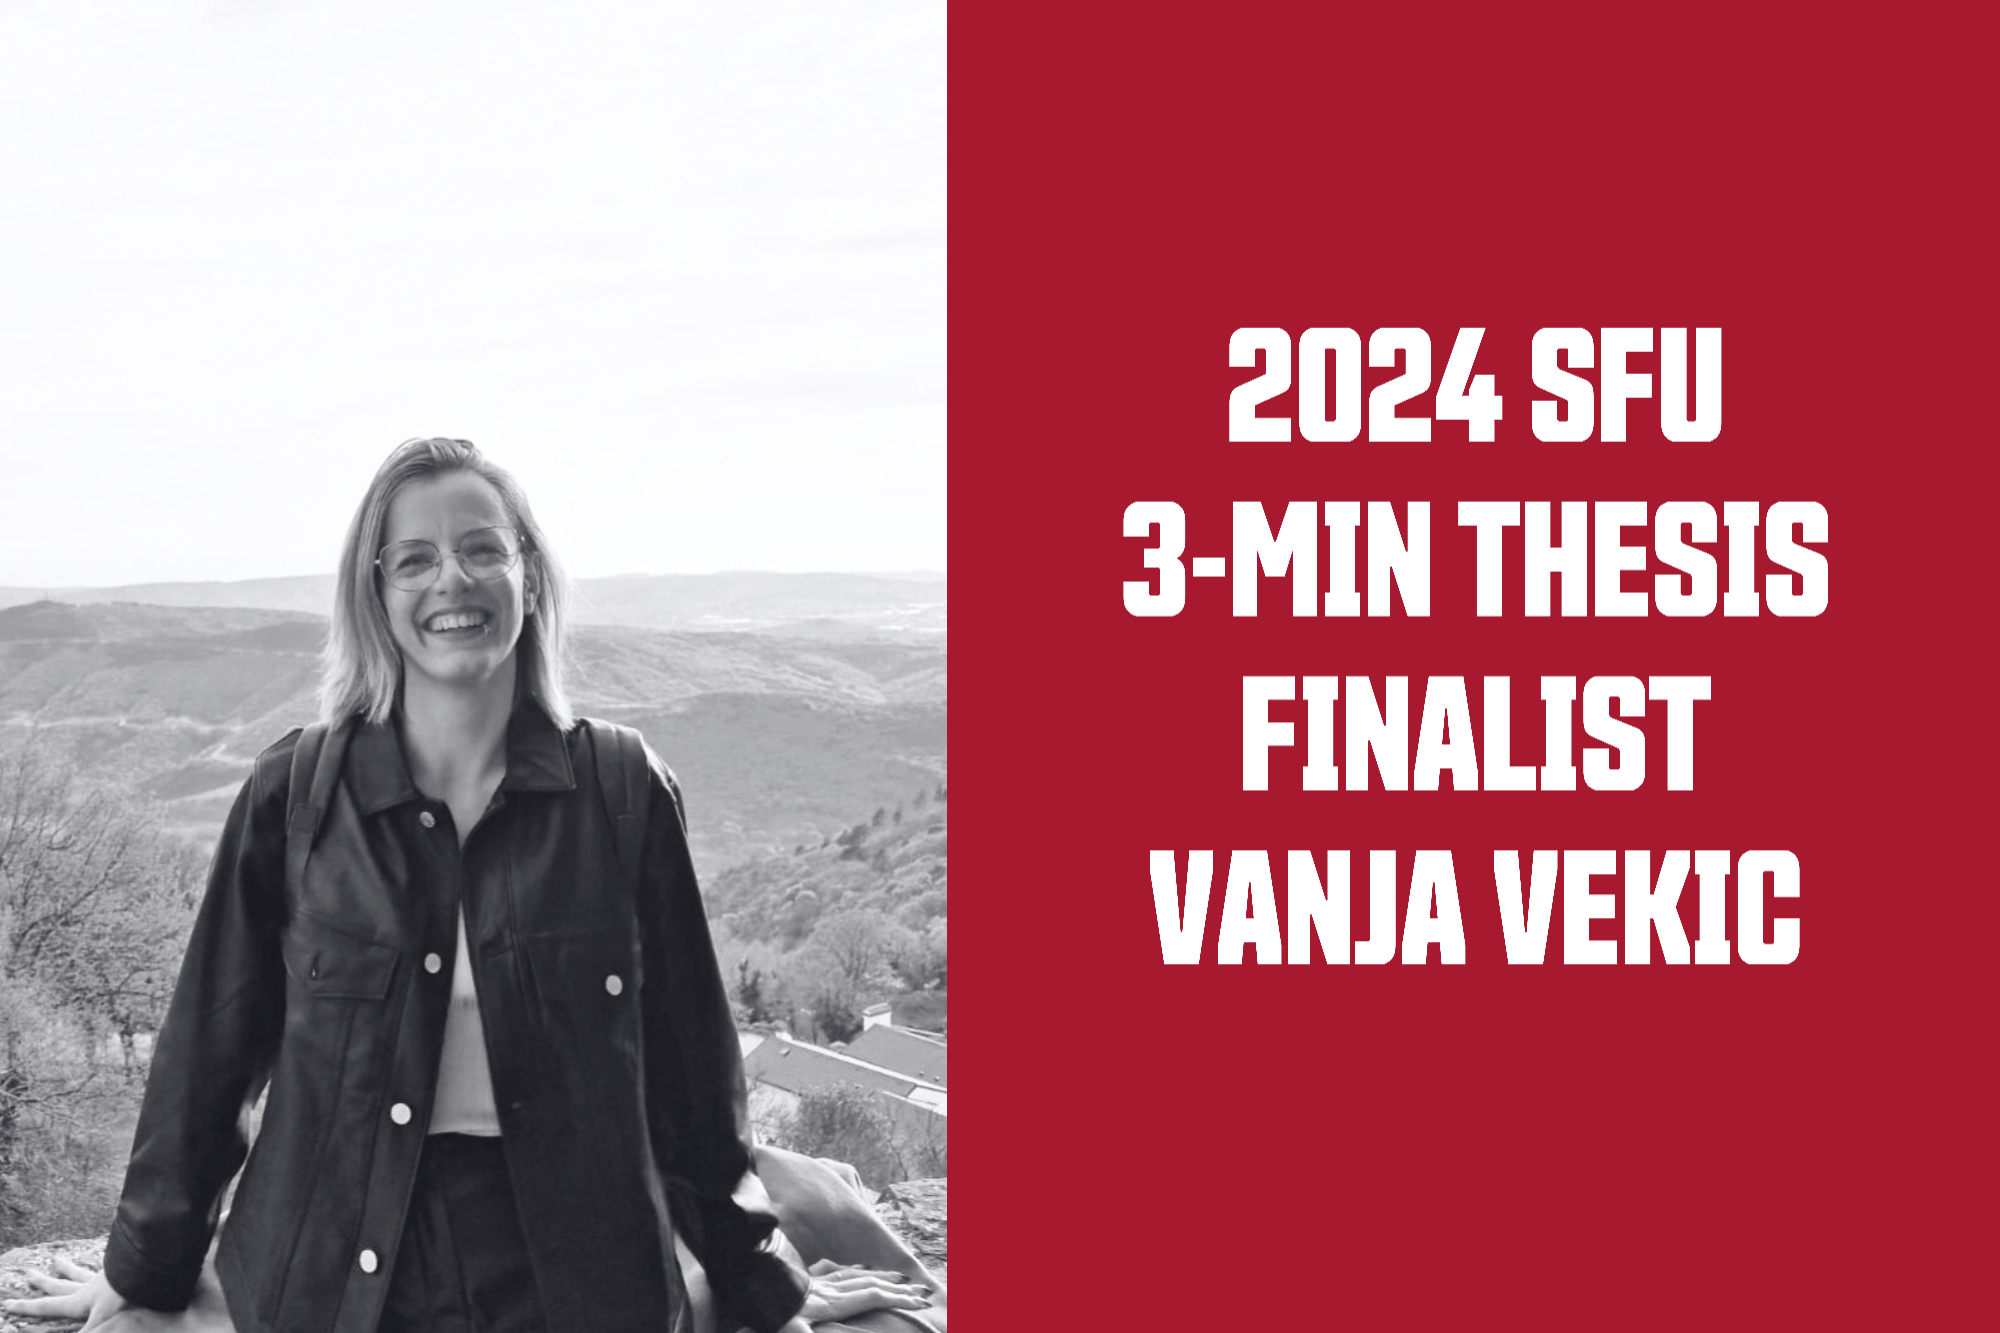 Watch finalist Vanja Vekic present her Three-Minute Thesis